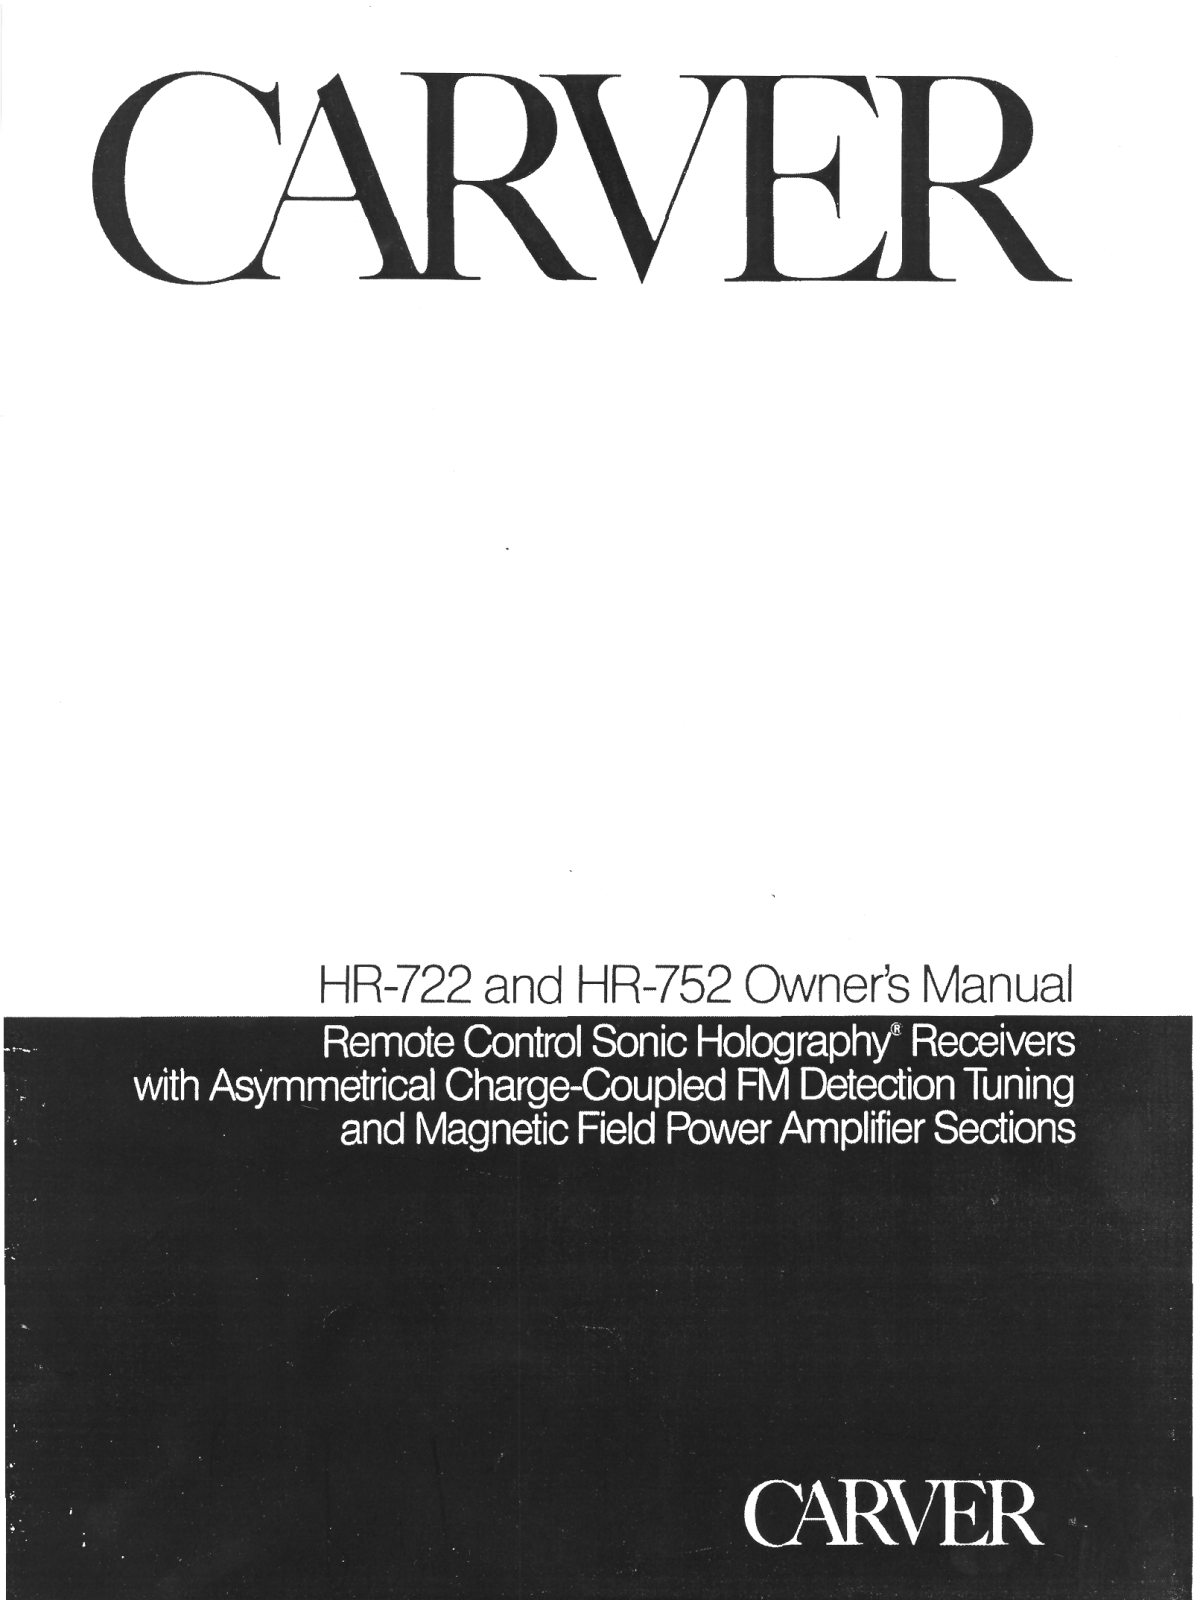 Carver HR-752 Owners manual